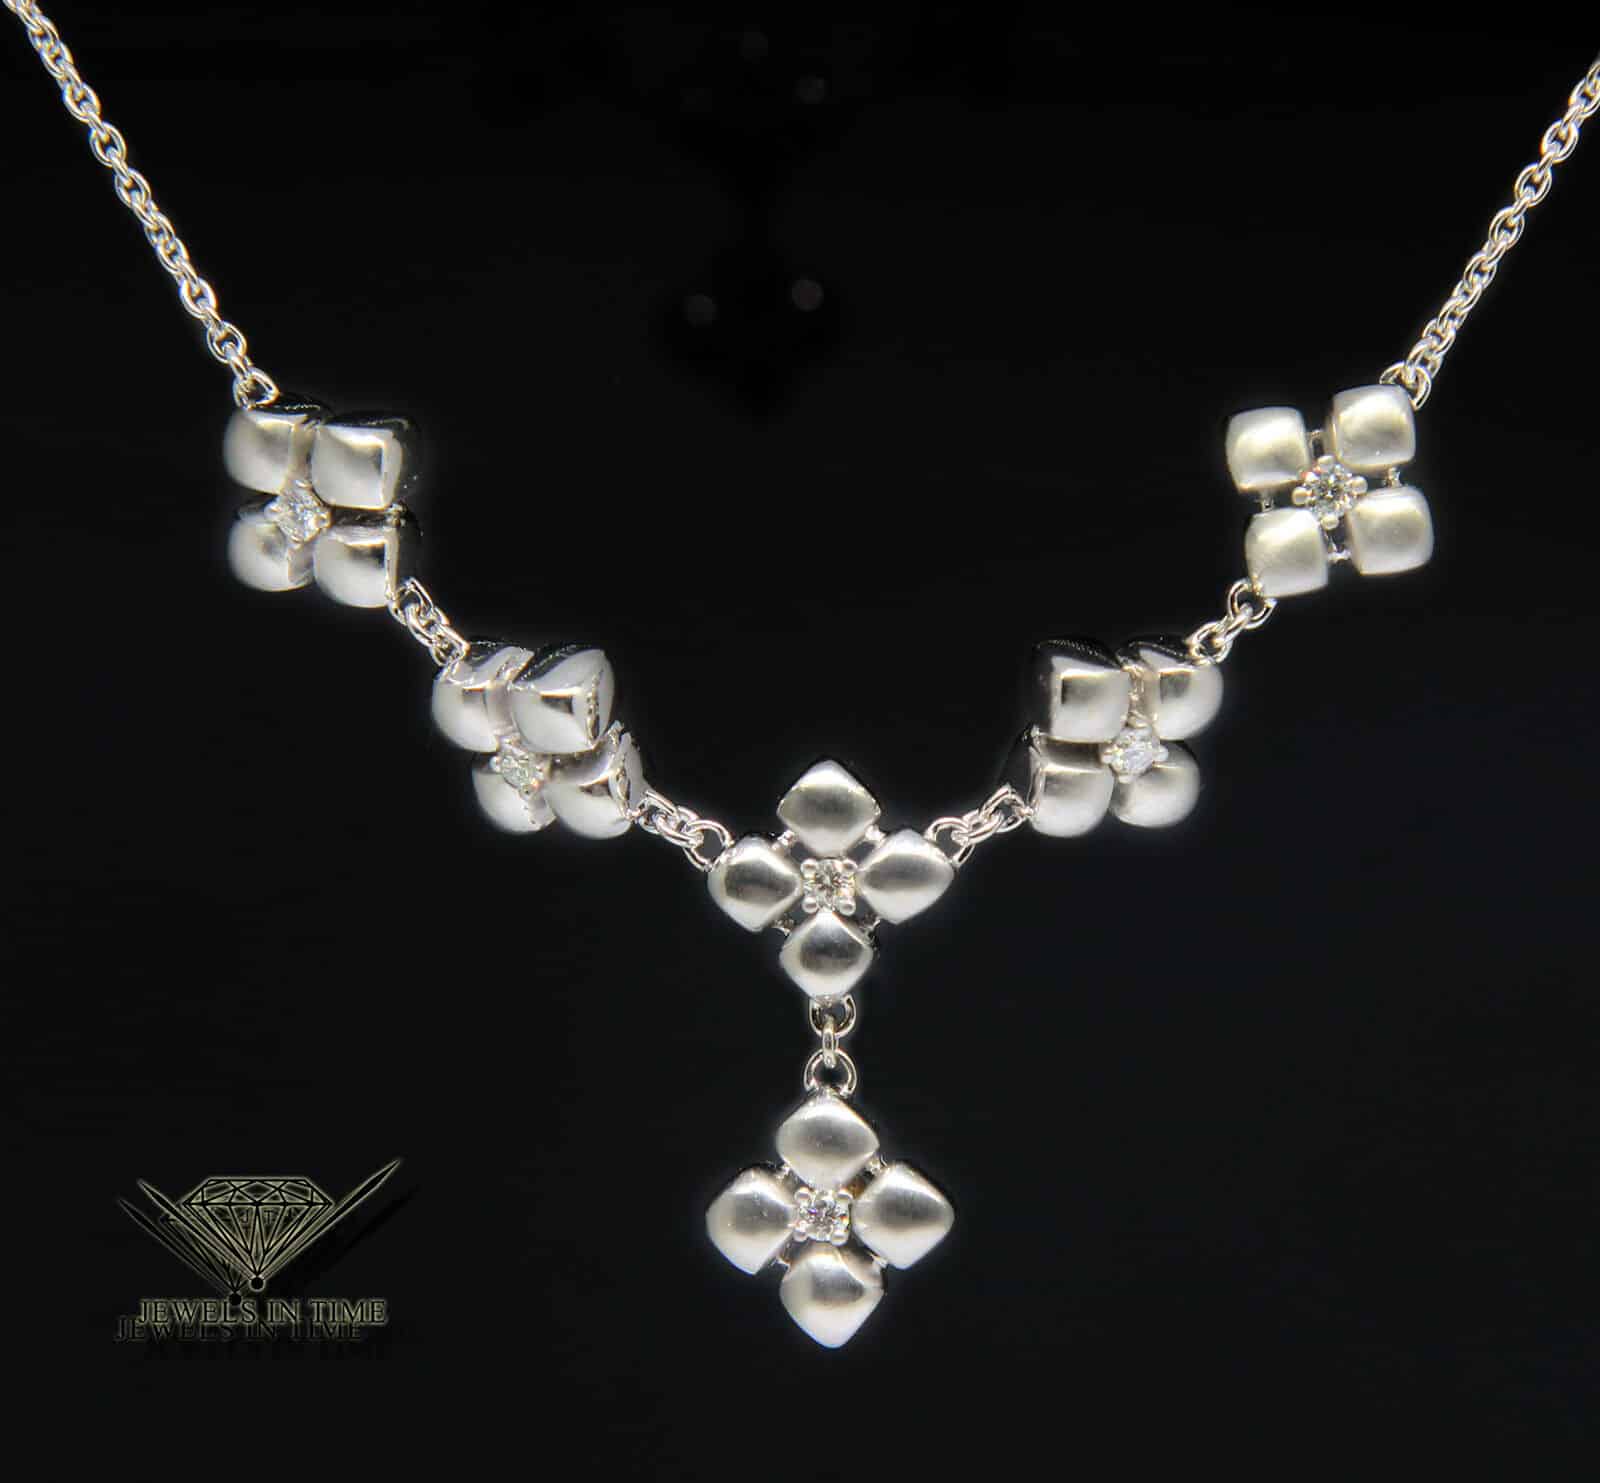 Marlene Stowe Flower Motif 18k White Gold Diamond Necklace Chain 16